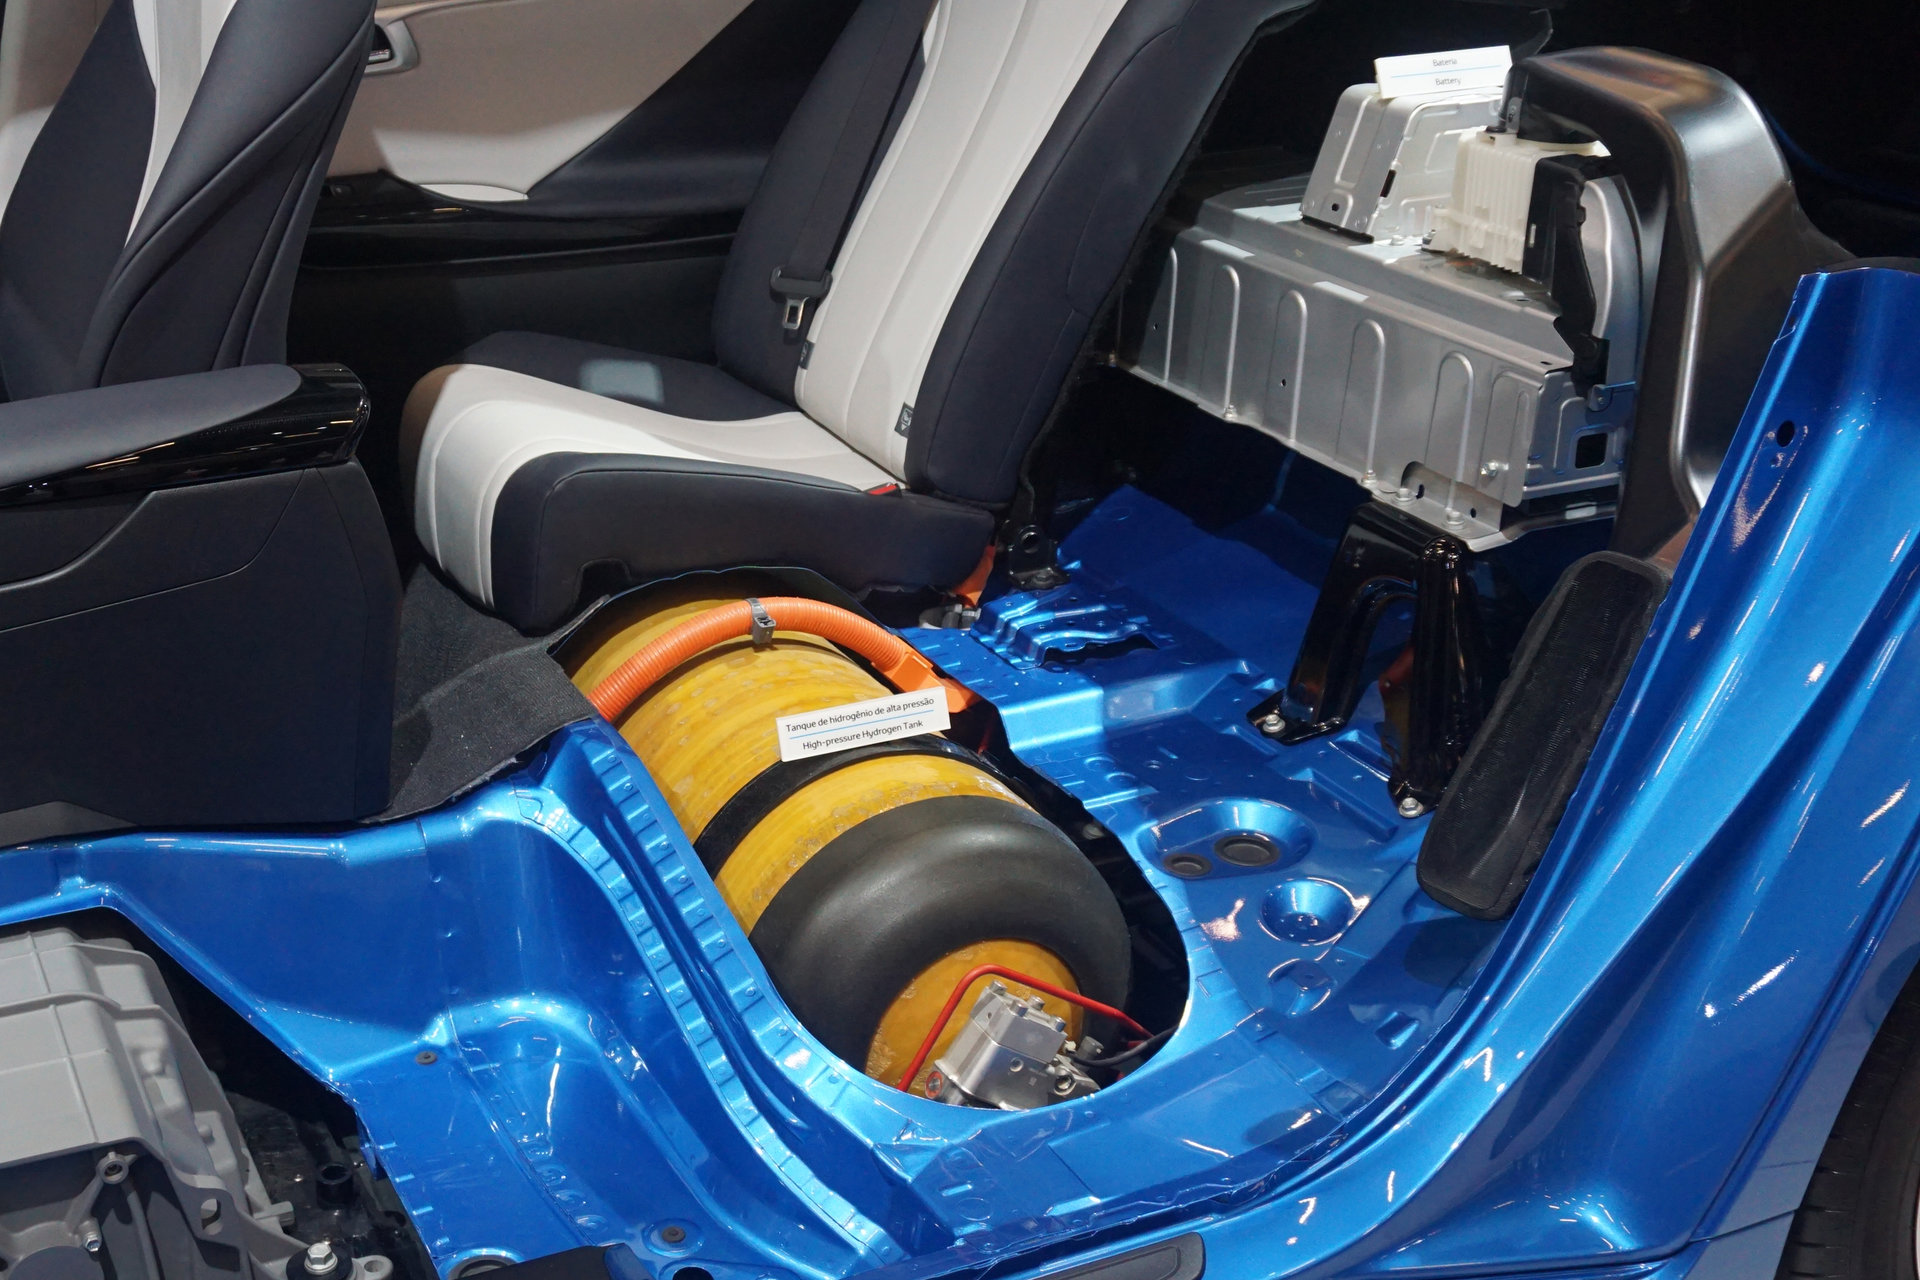 Toyota Mirai Fuel Cell cutaway